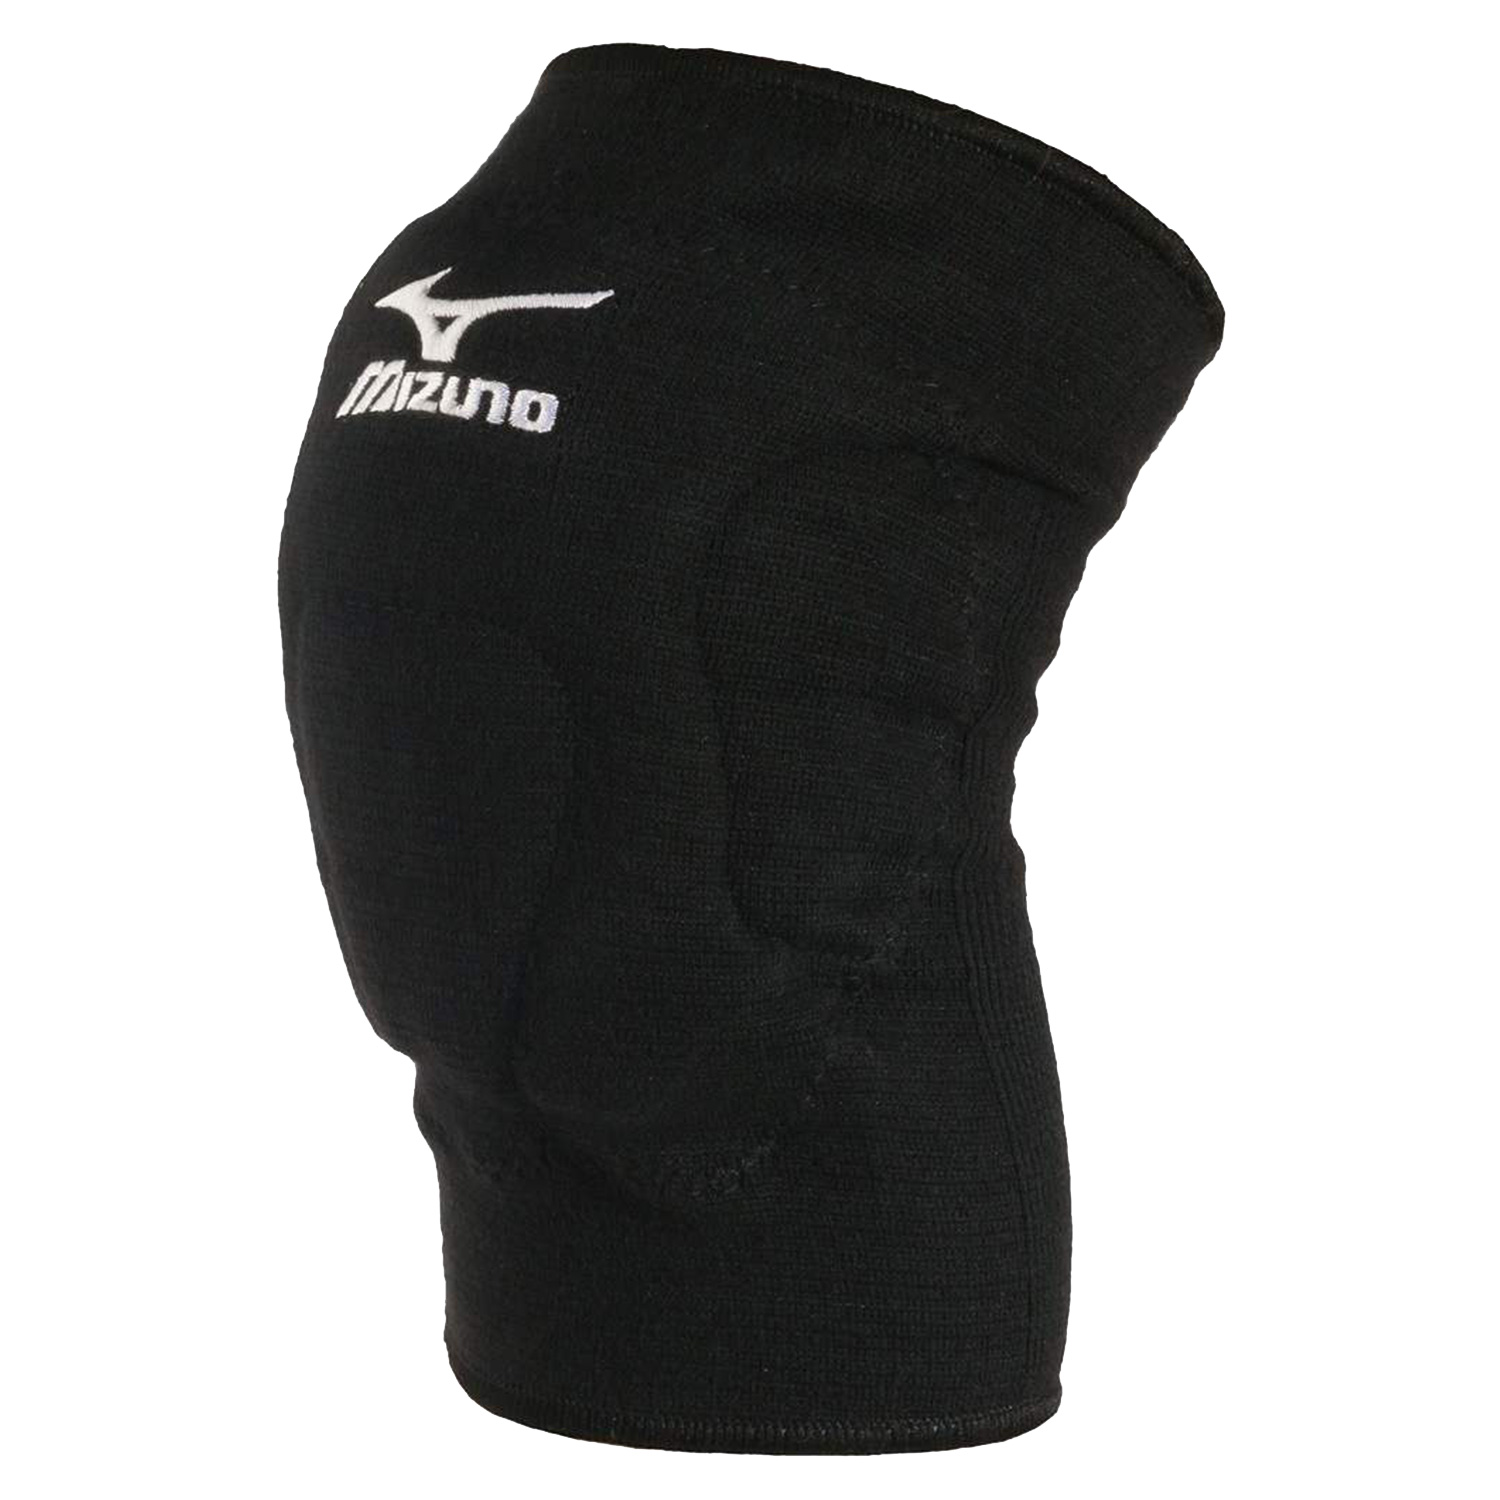 Наколенники Mizuno,VS1 kneepad, размер XL